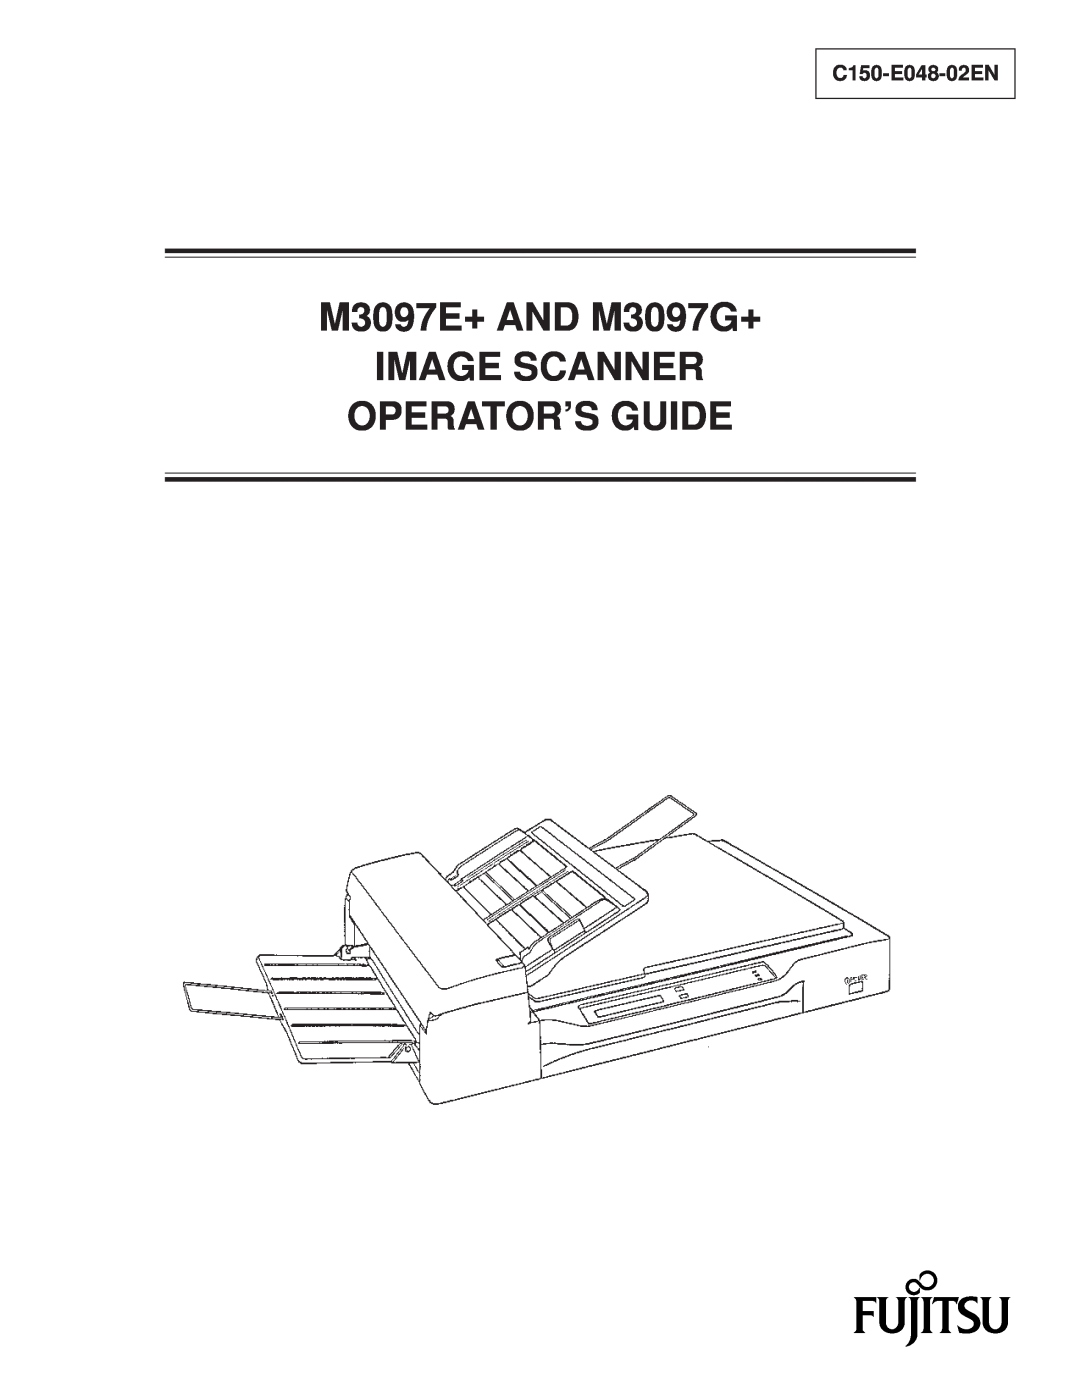 Fujitsu manual C150-E048-02EN, M3097E+ AND M3097G+ IMAGE SCANNER OPERATOR’S GUIDE 